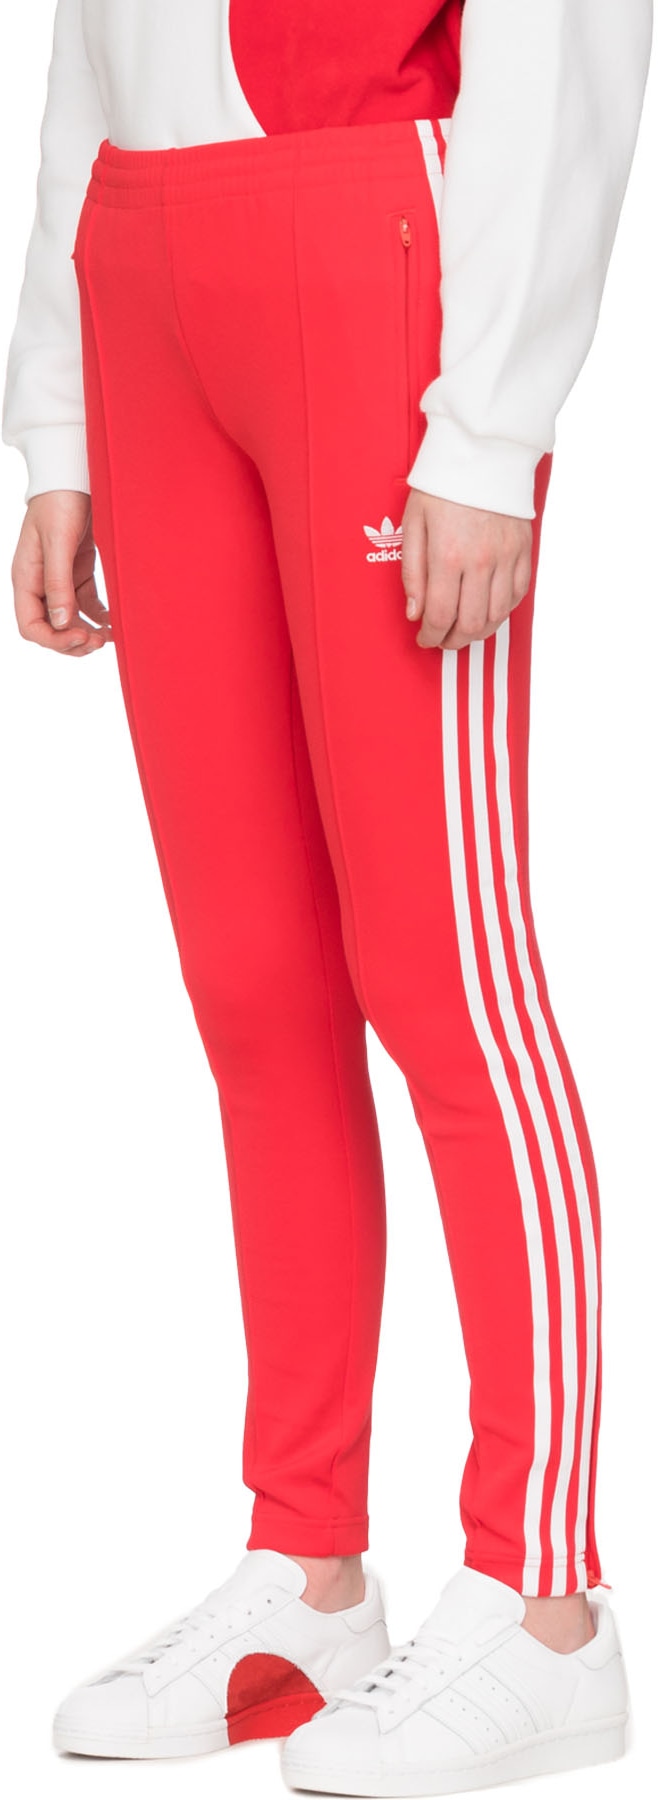 adidas radiant red pants